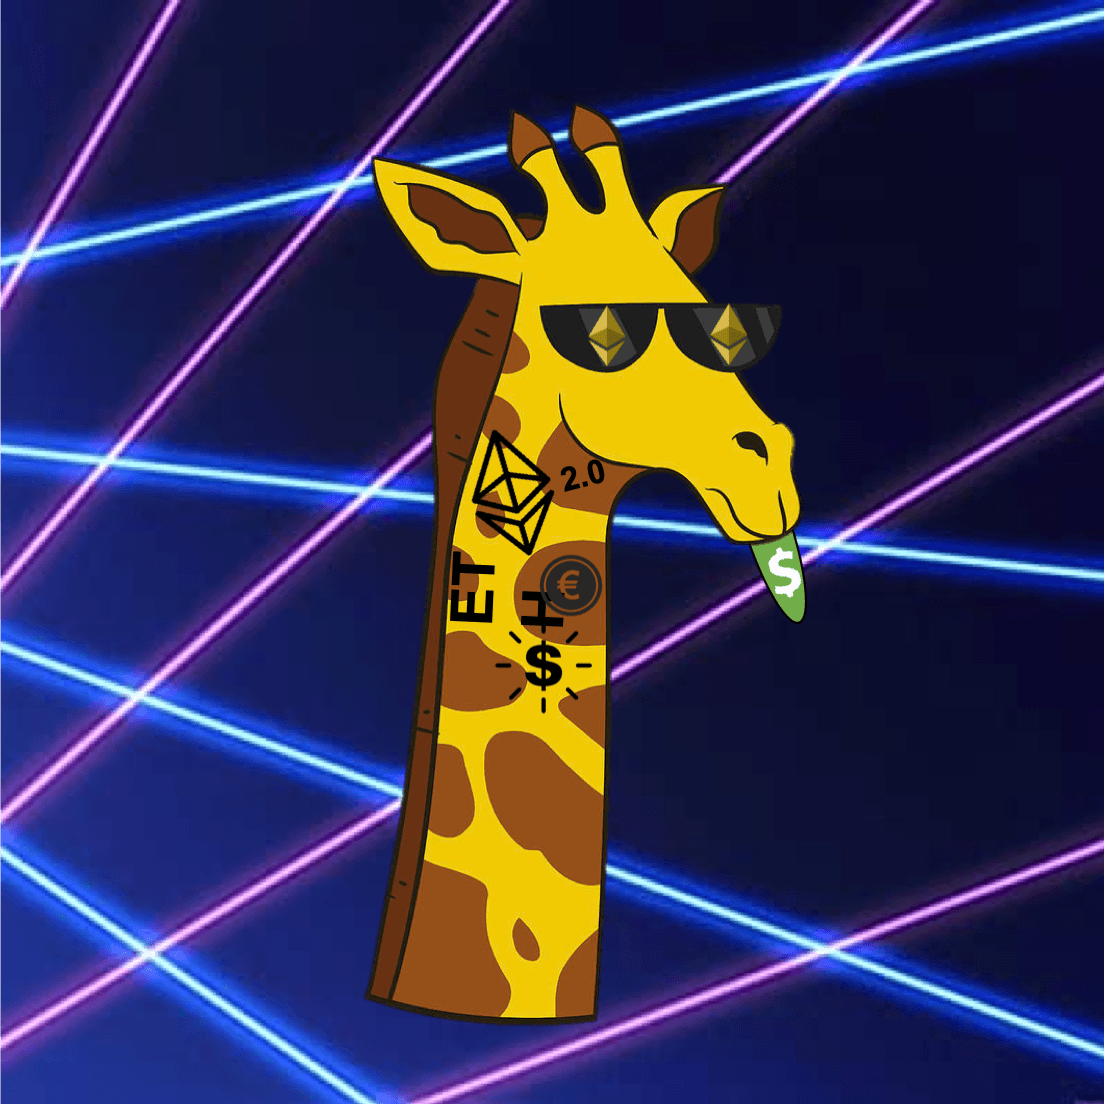 EthereumGiraffe